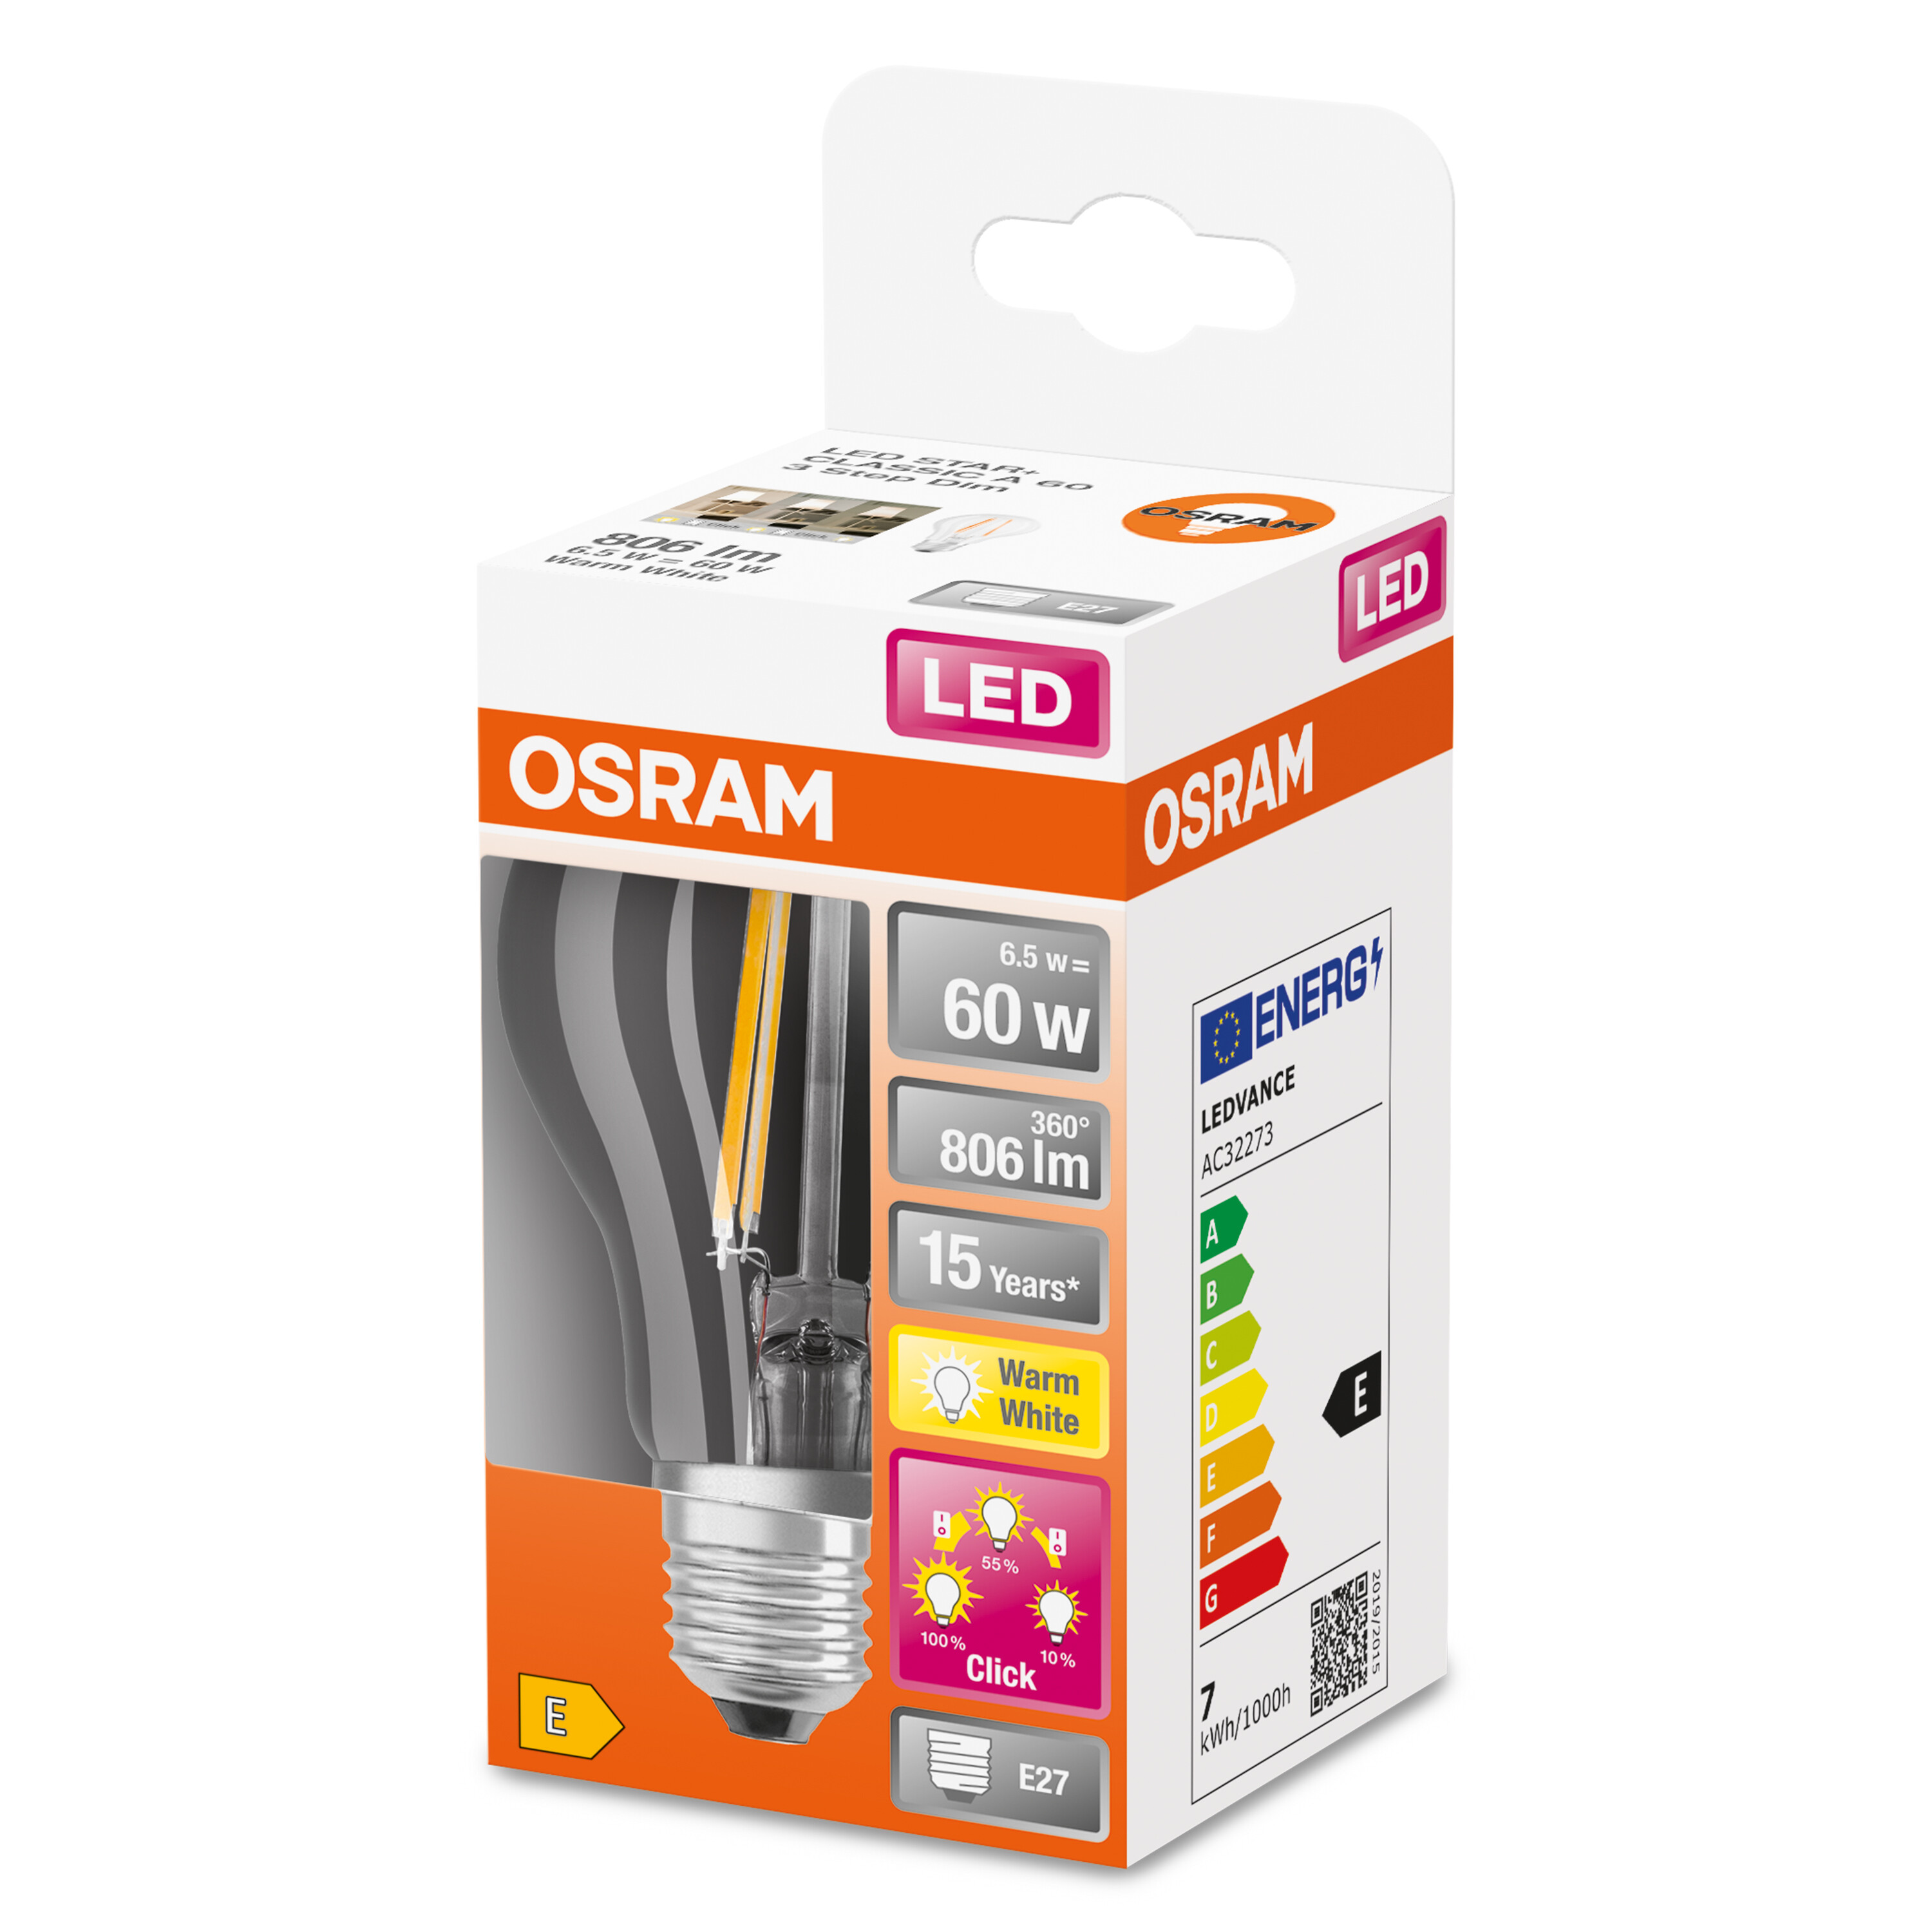 OSRAM  LED A Lumen 806 Warmweiß STEP THREE DIM LED CLASSIC Lampe